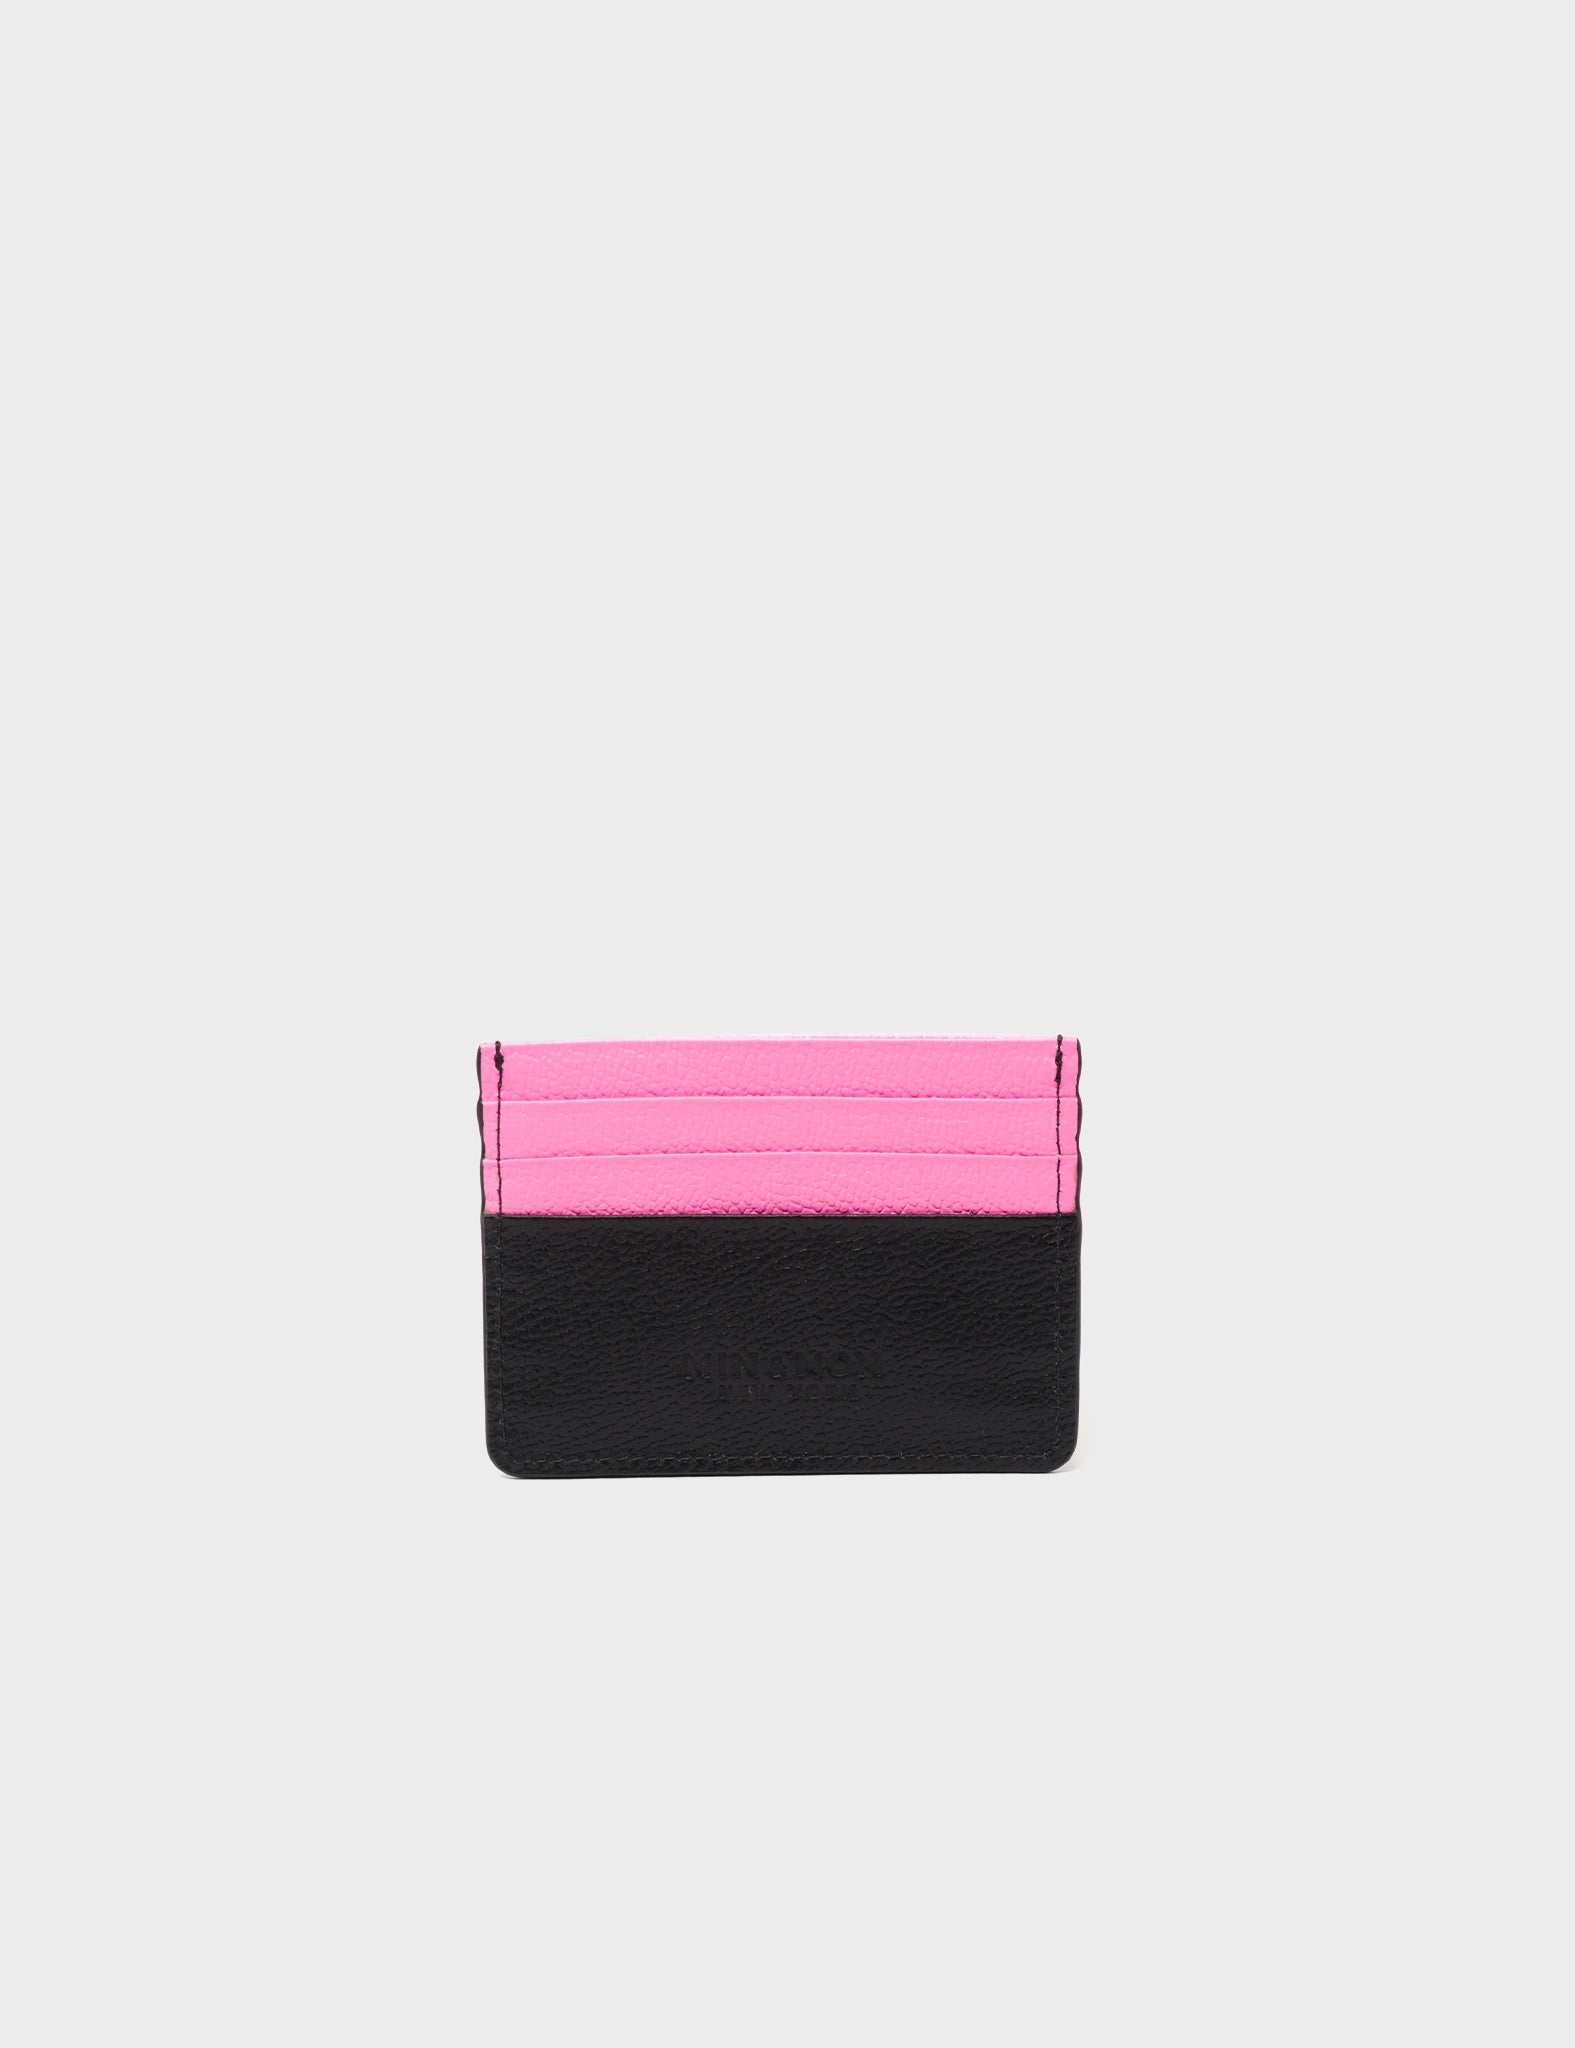 Filium Pink and Black Leather Cardholder - Cloud Applique - Back View